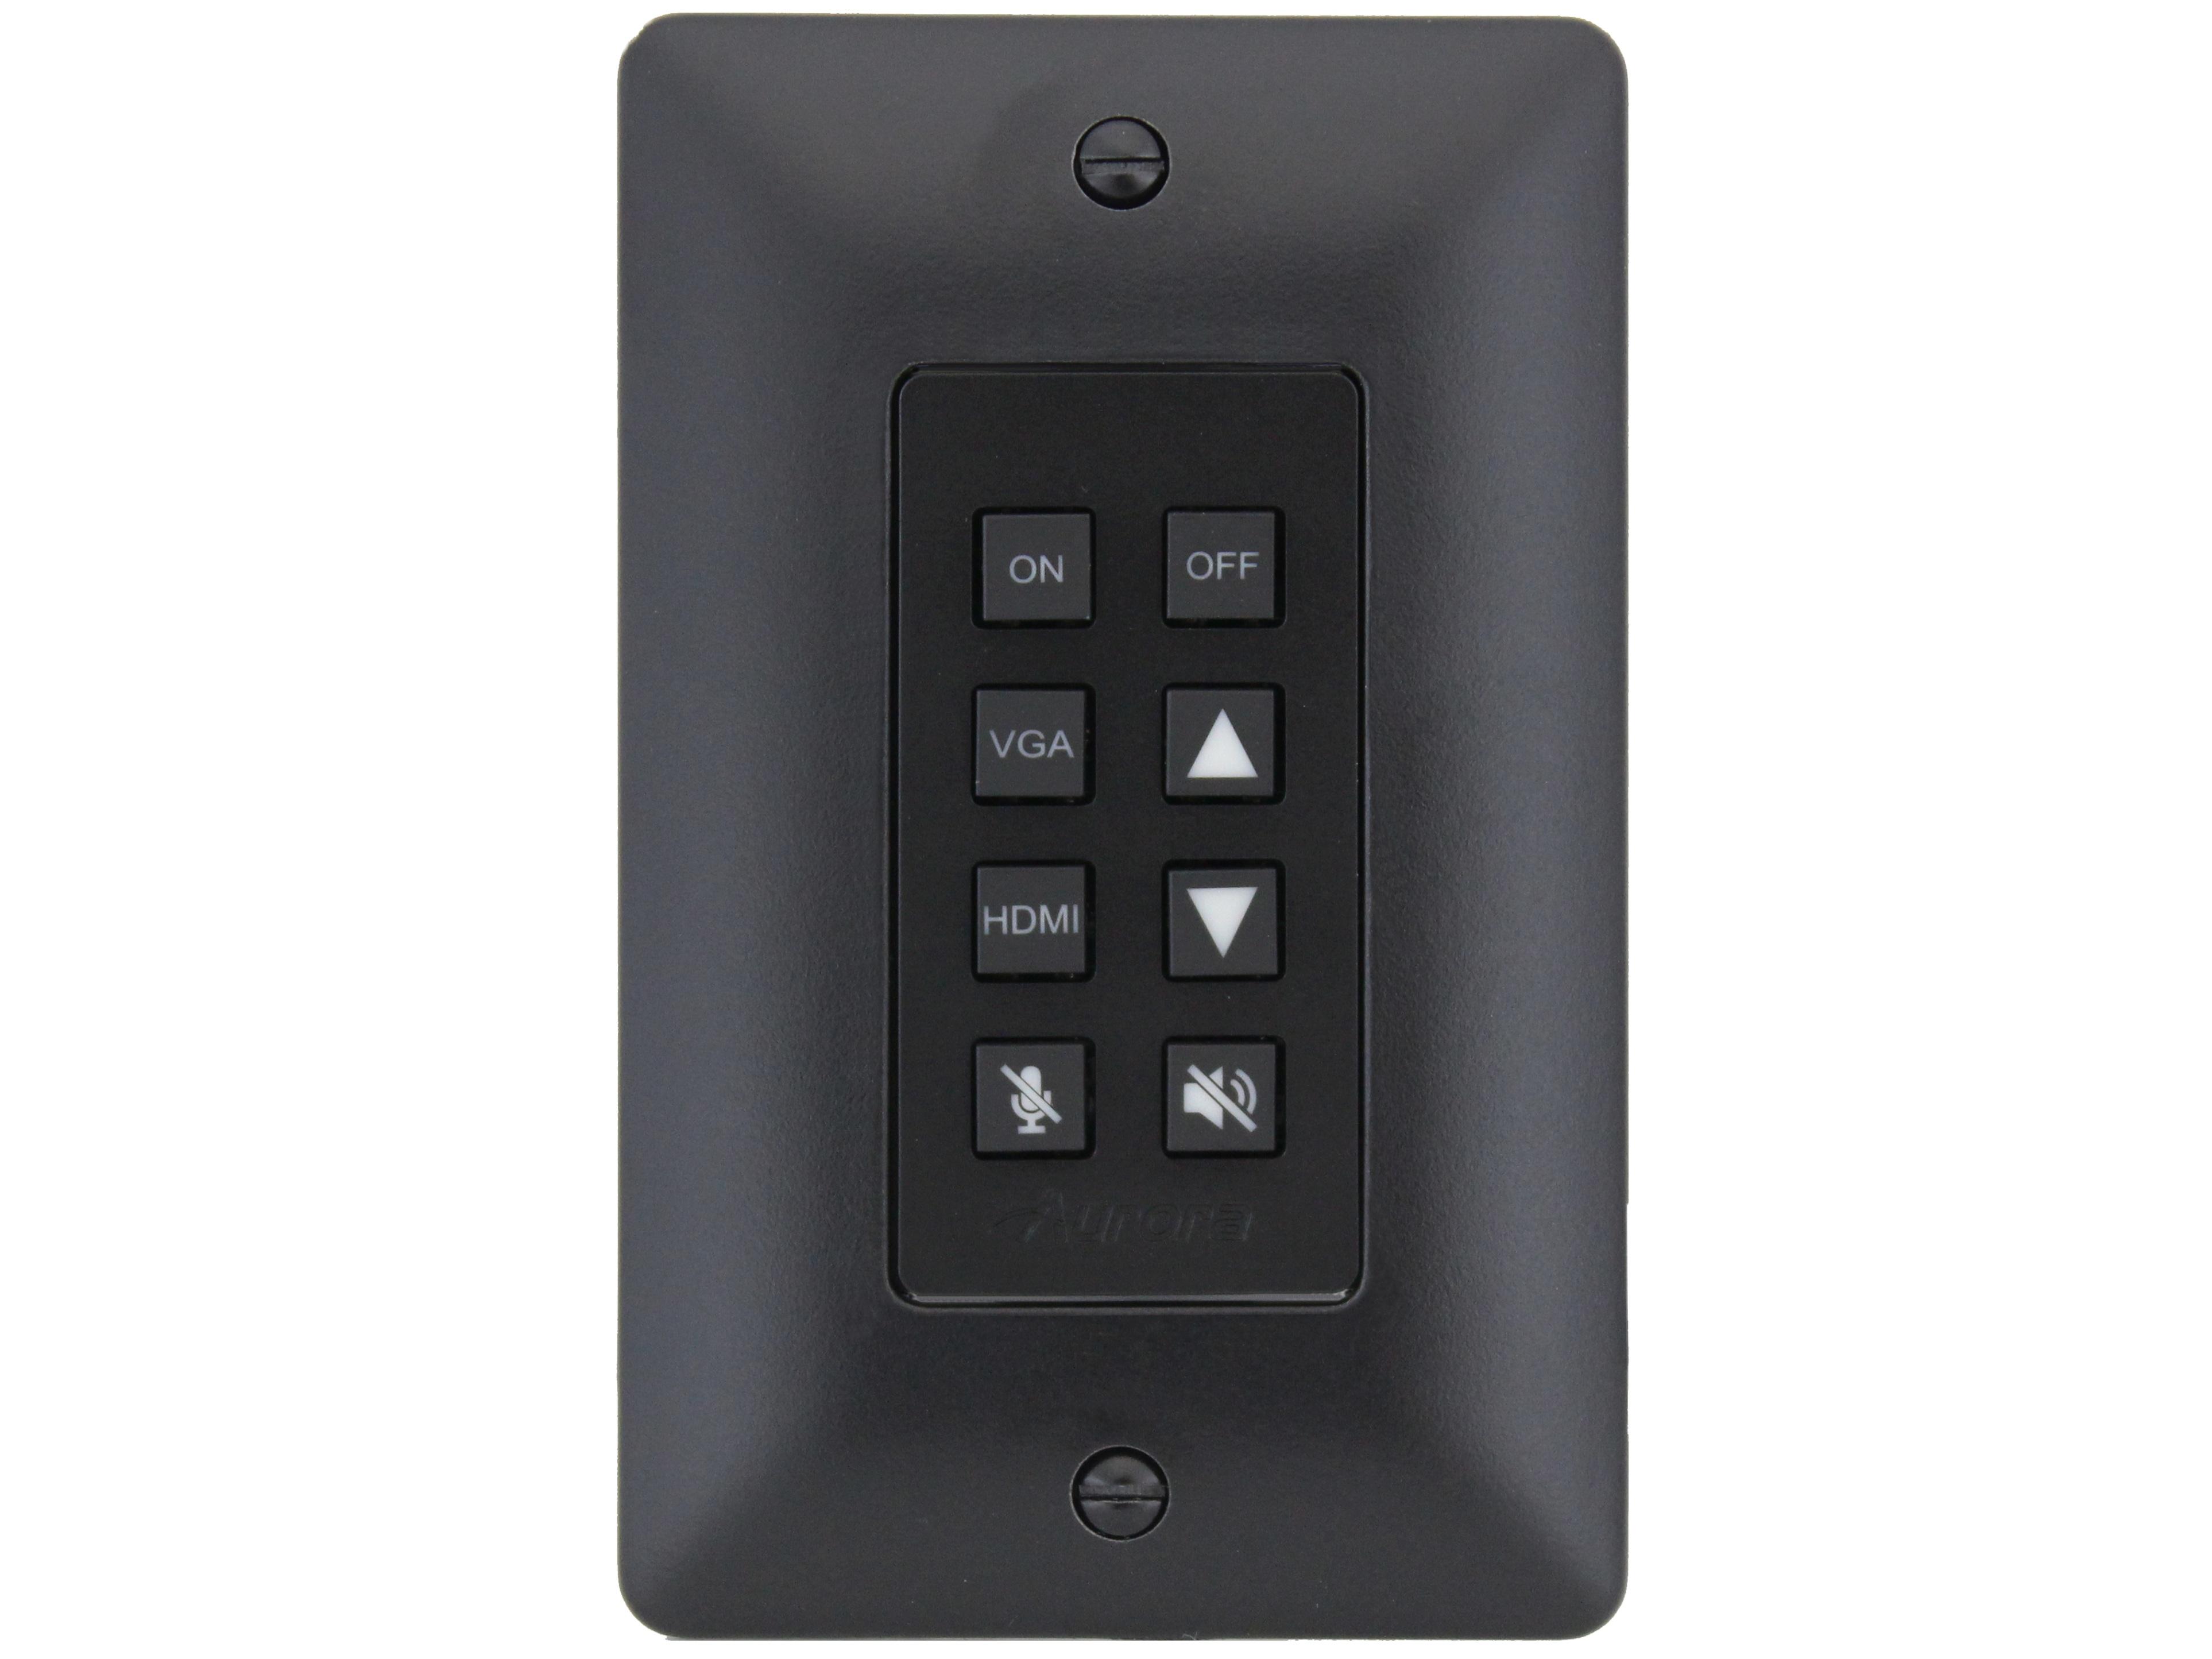 DXB-8i-B 8-Button Ethernet Backlit Panel/Black by Aurora Multimedia